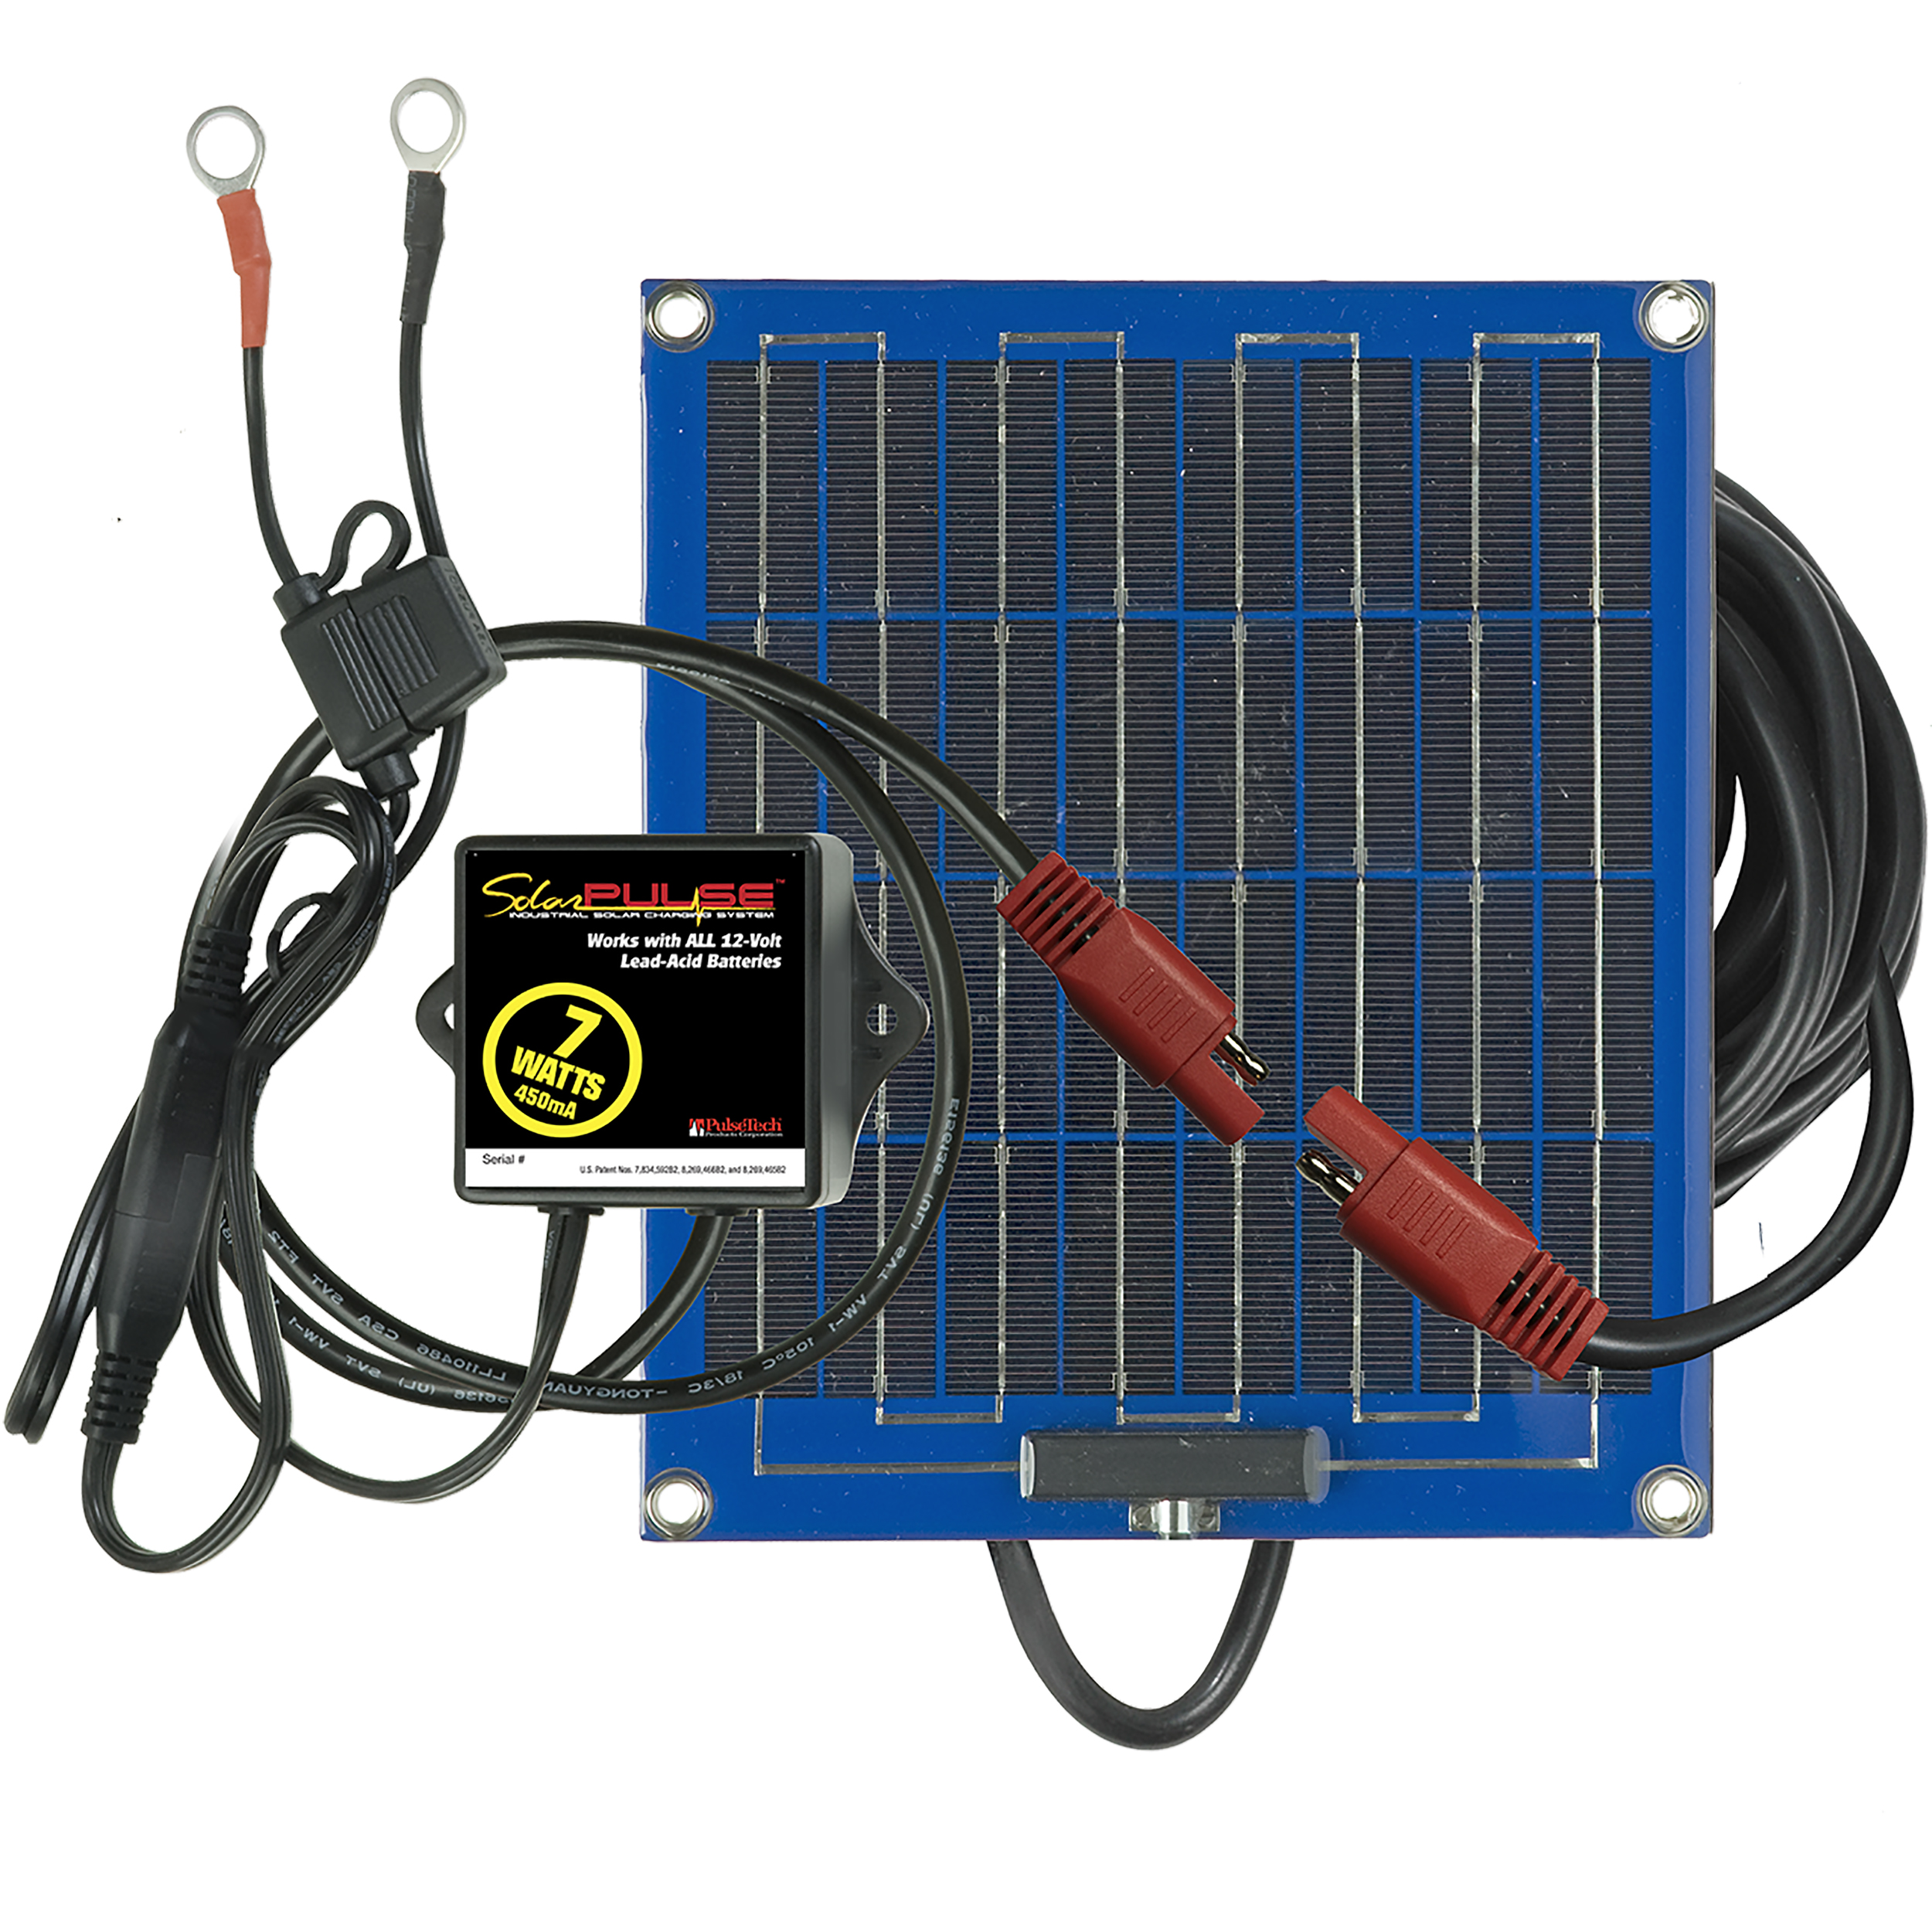 A PulseTech 12v 7-Watt Solar Panel with Desulfating Controller